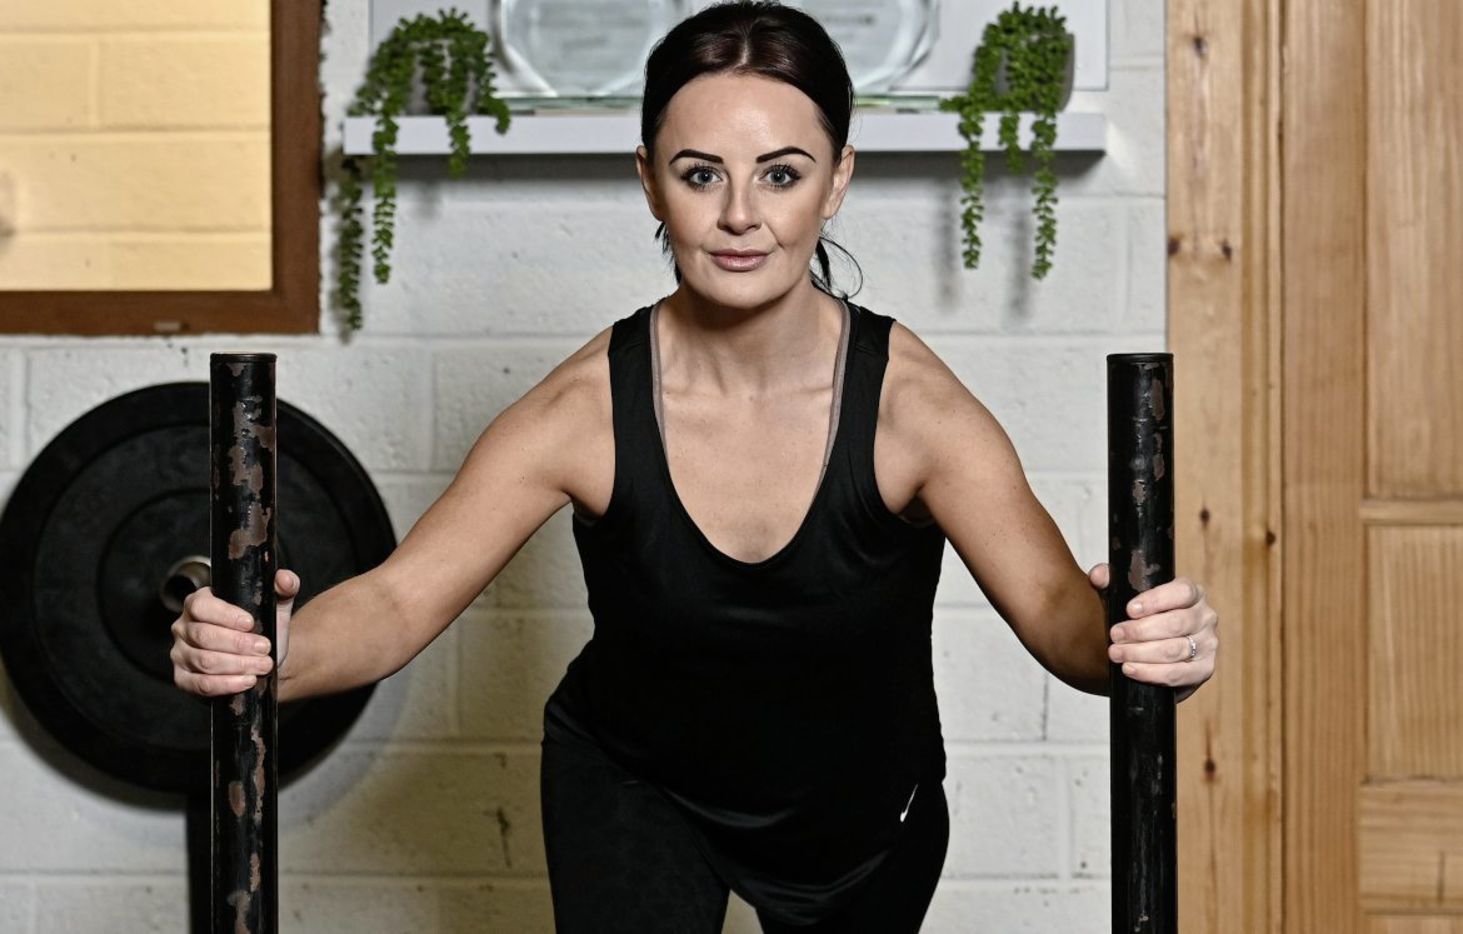 Caroline Girvan Online Fitness Coach - Gymfluencers